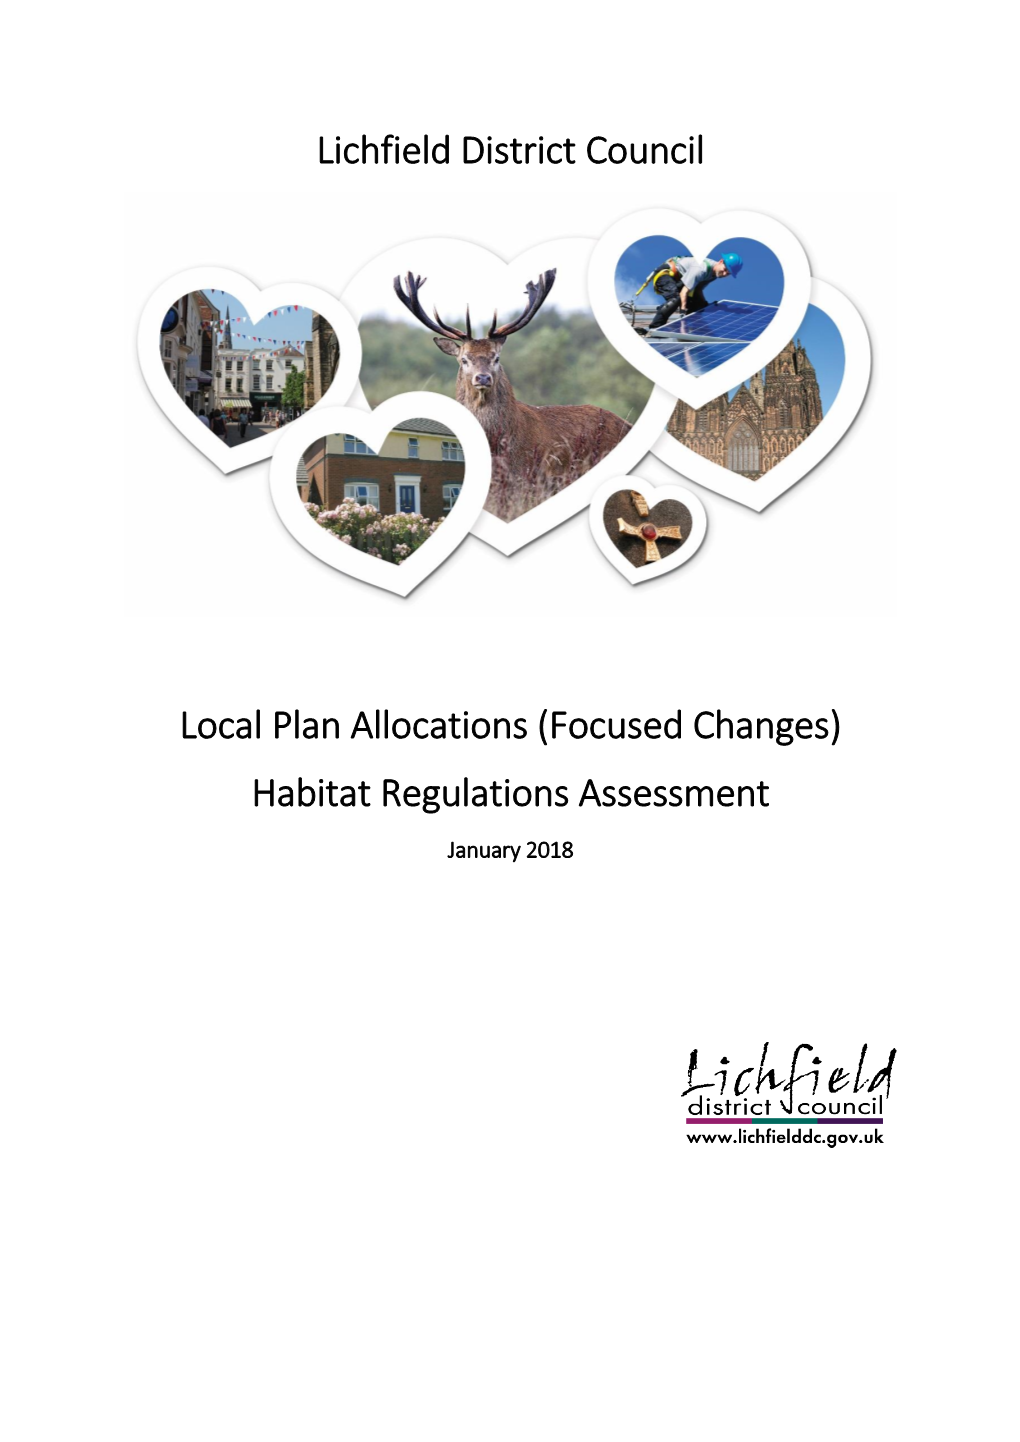 Download: Habitat Regulations Assessment Local Plan Allocations